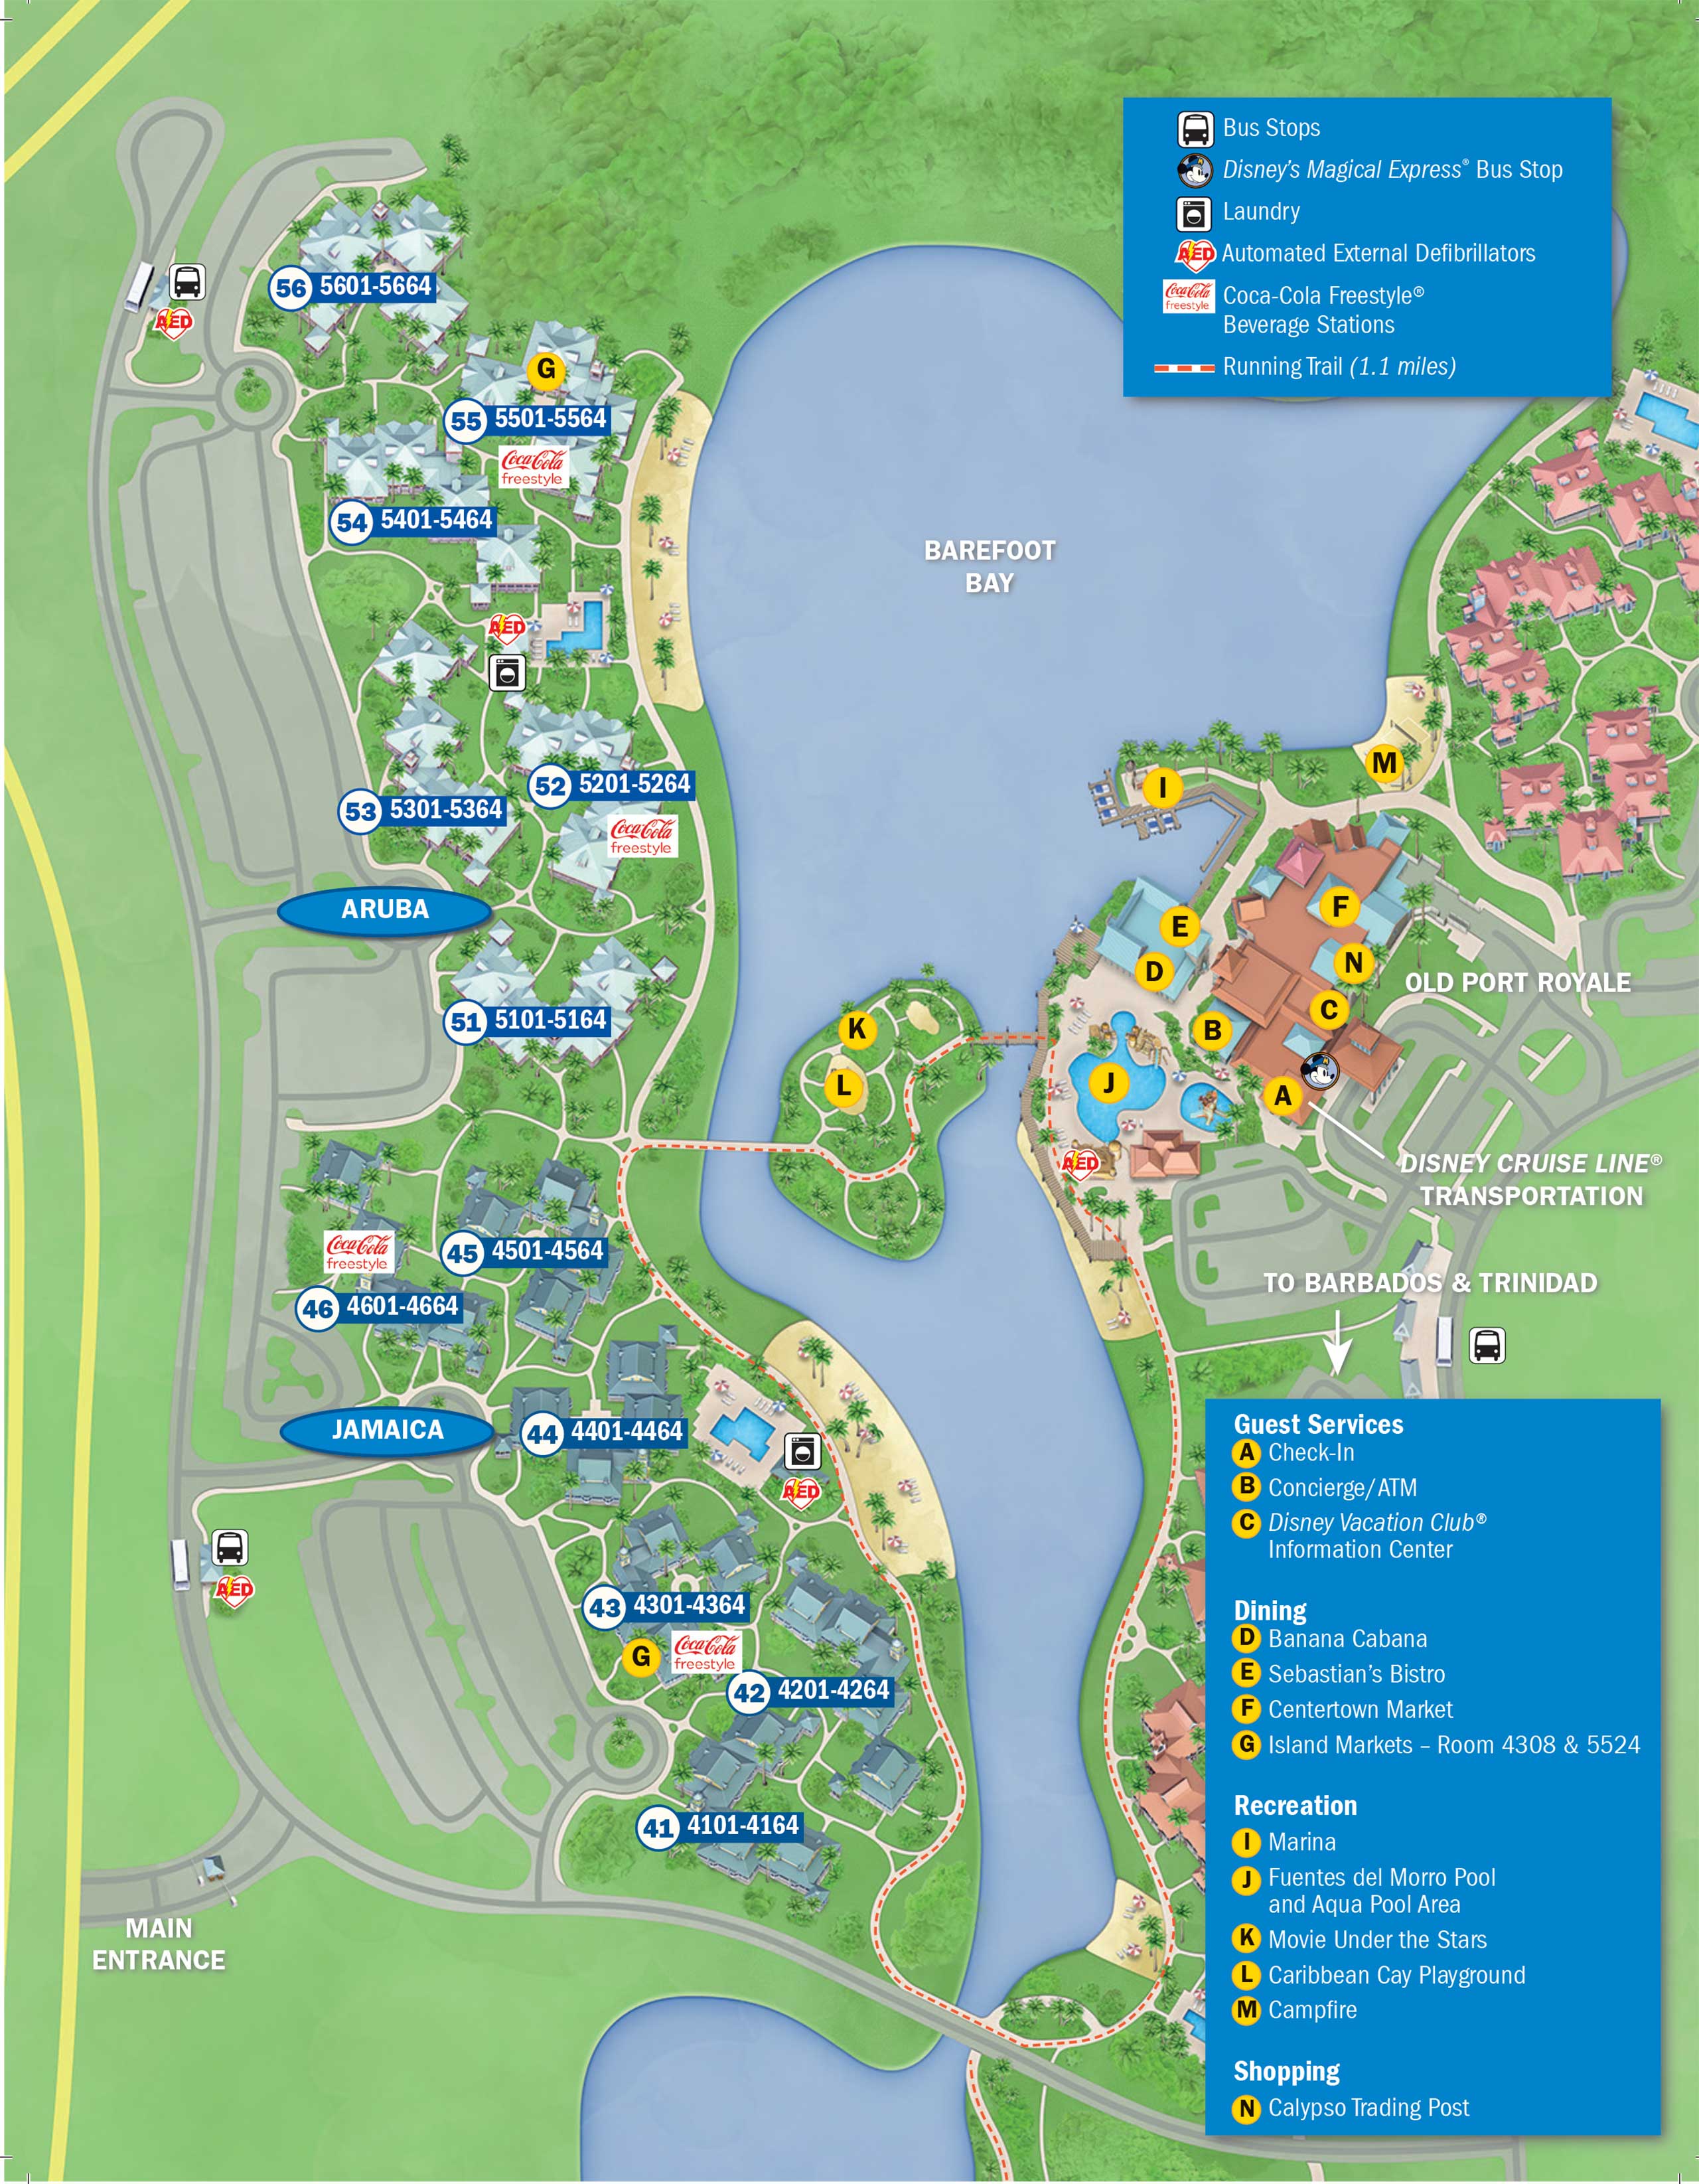 Caribbean Resort Disney World Map PHOTOS   New guide map for Disney's Caribbean Beach Resort